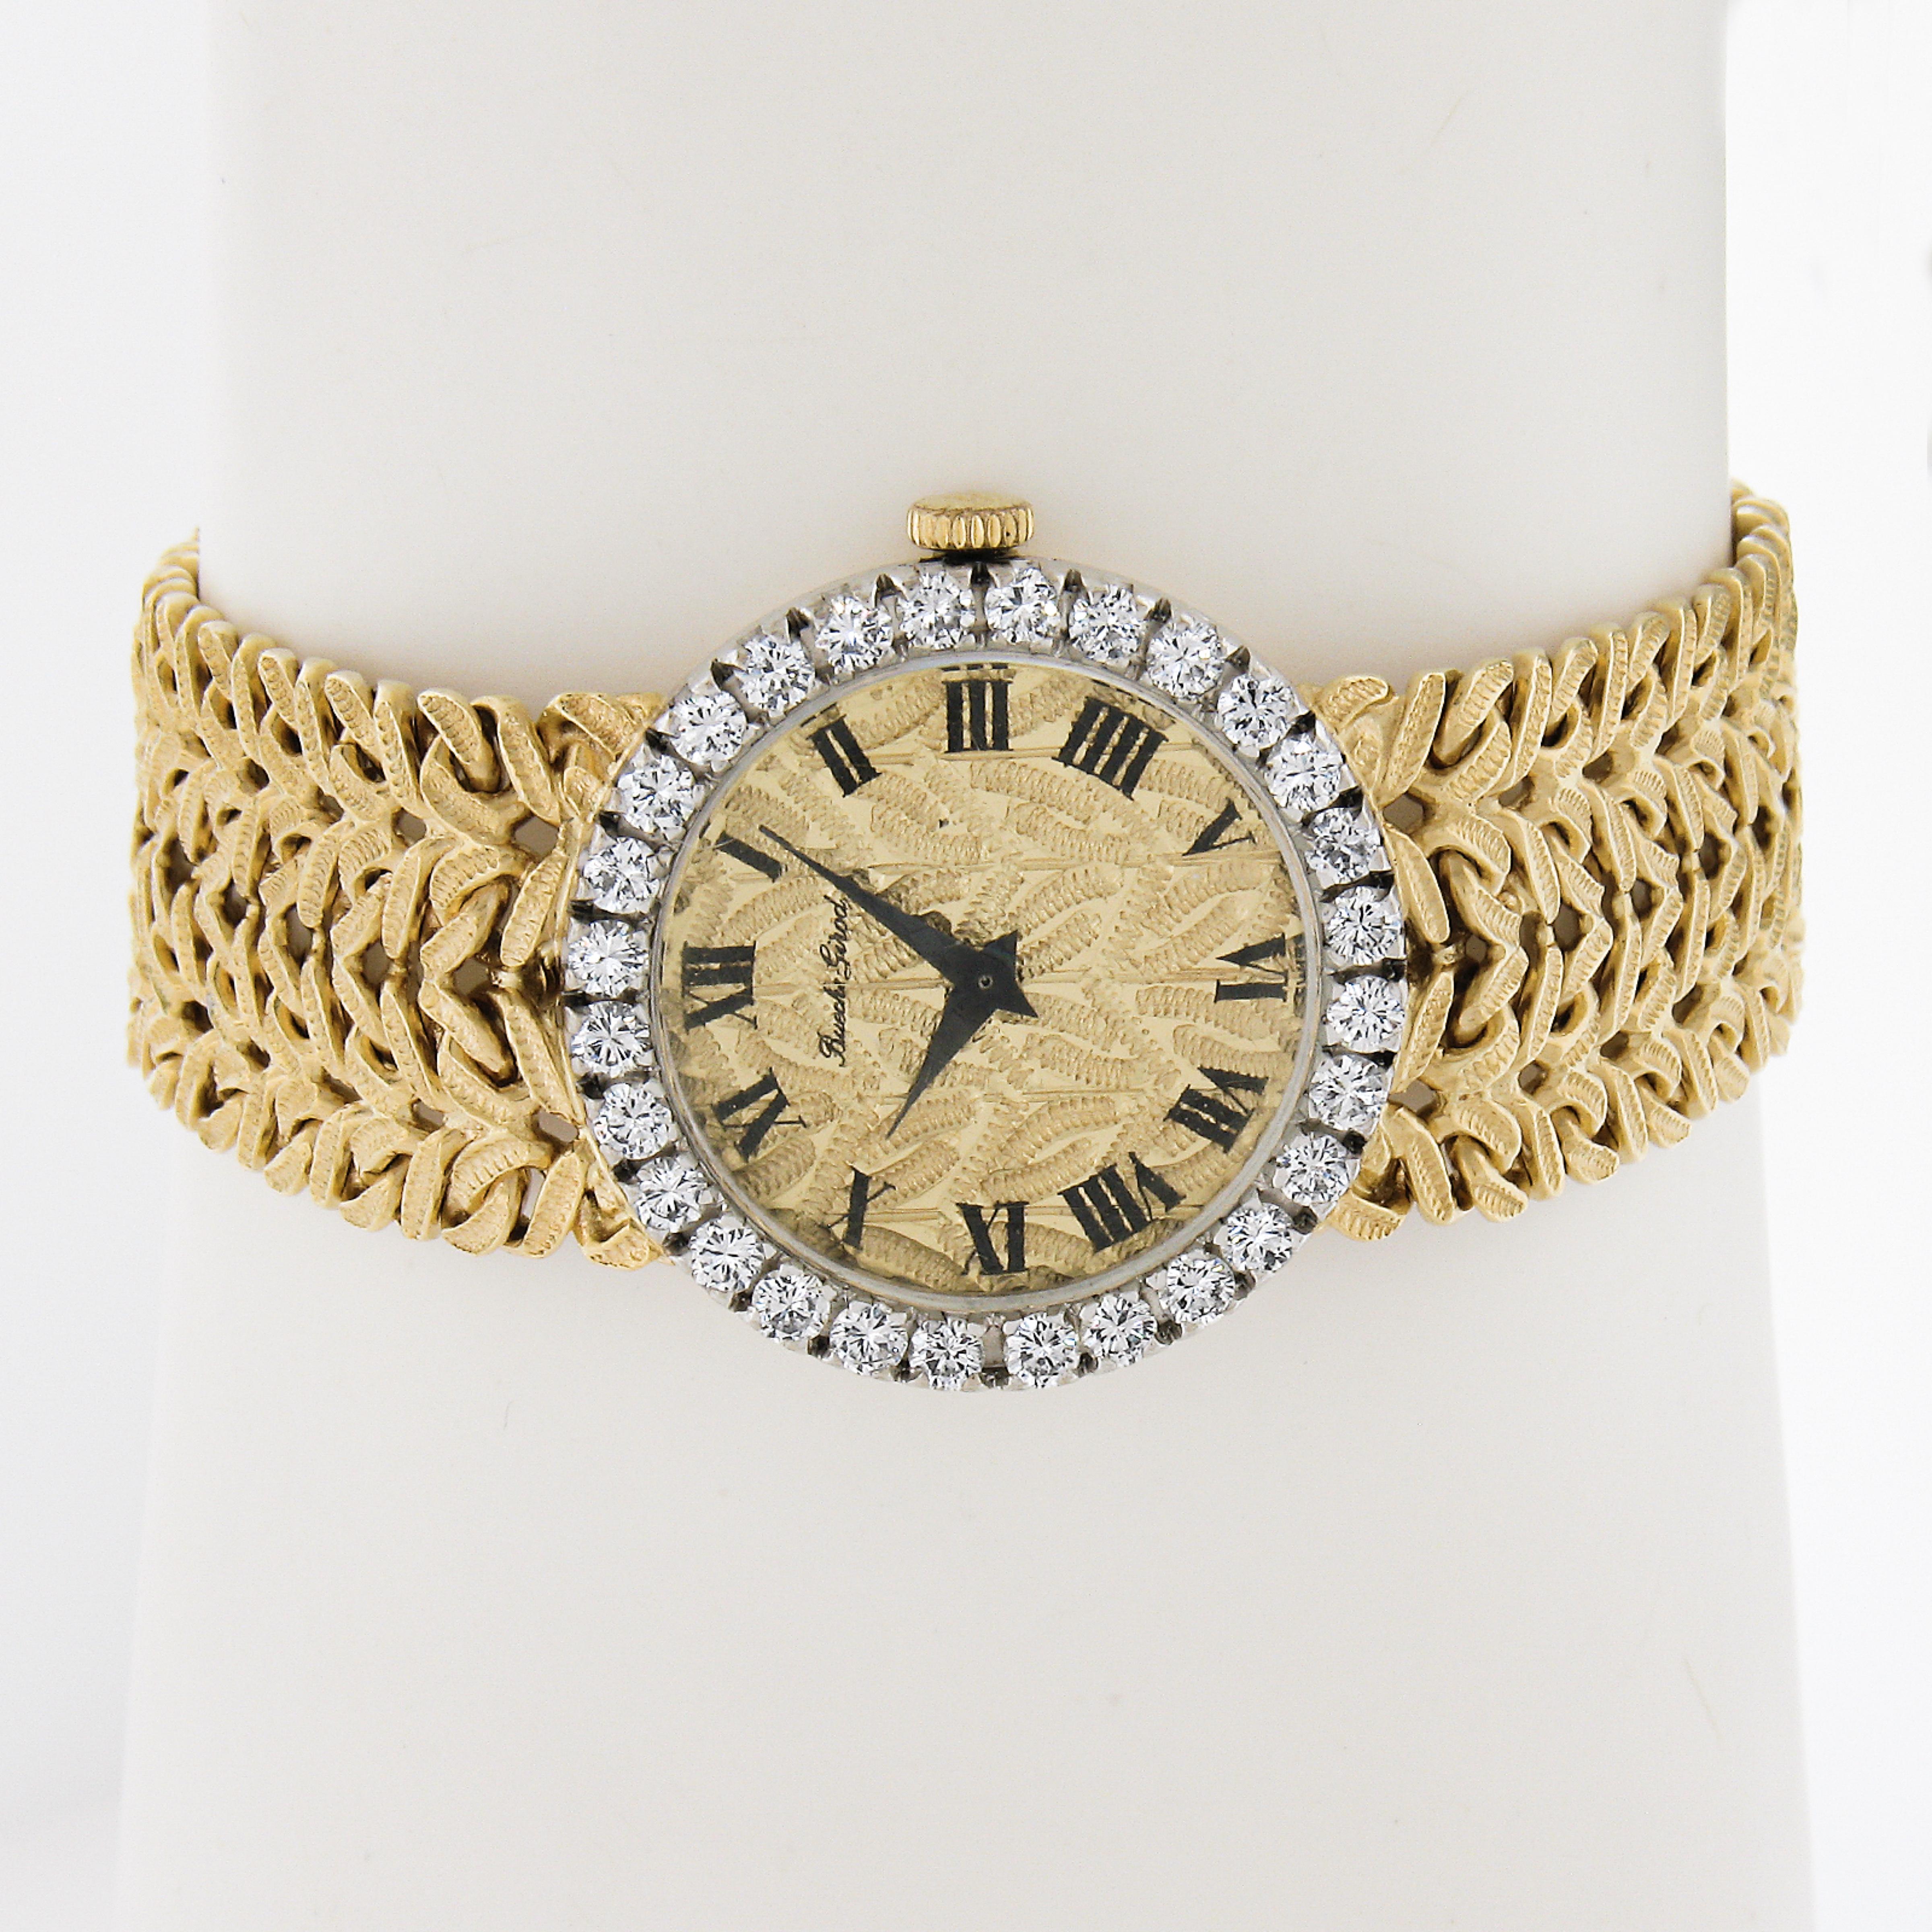 Vintage Bueche Girod 18k Gold 17j Mechanical Round Diamond Wrist Watch Bracelet For Sale 1